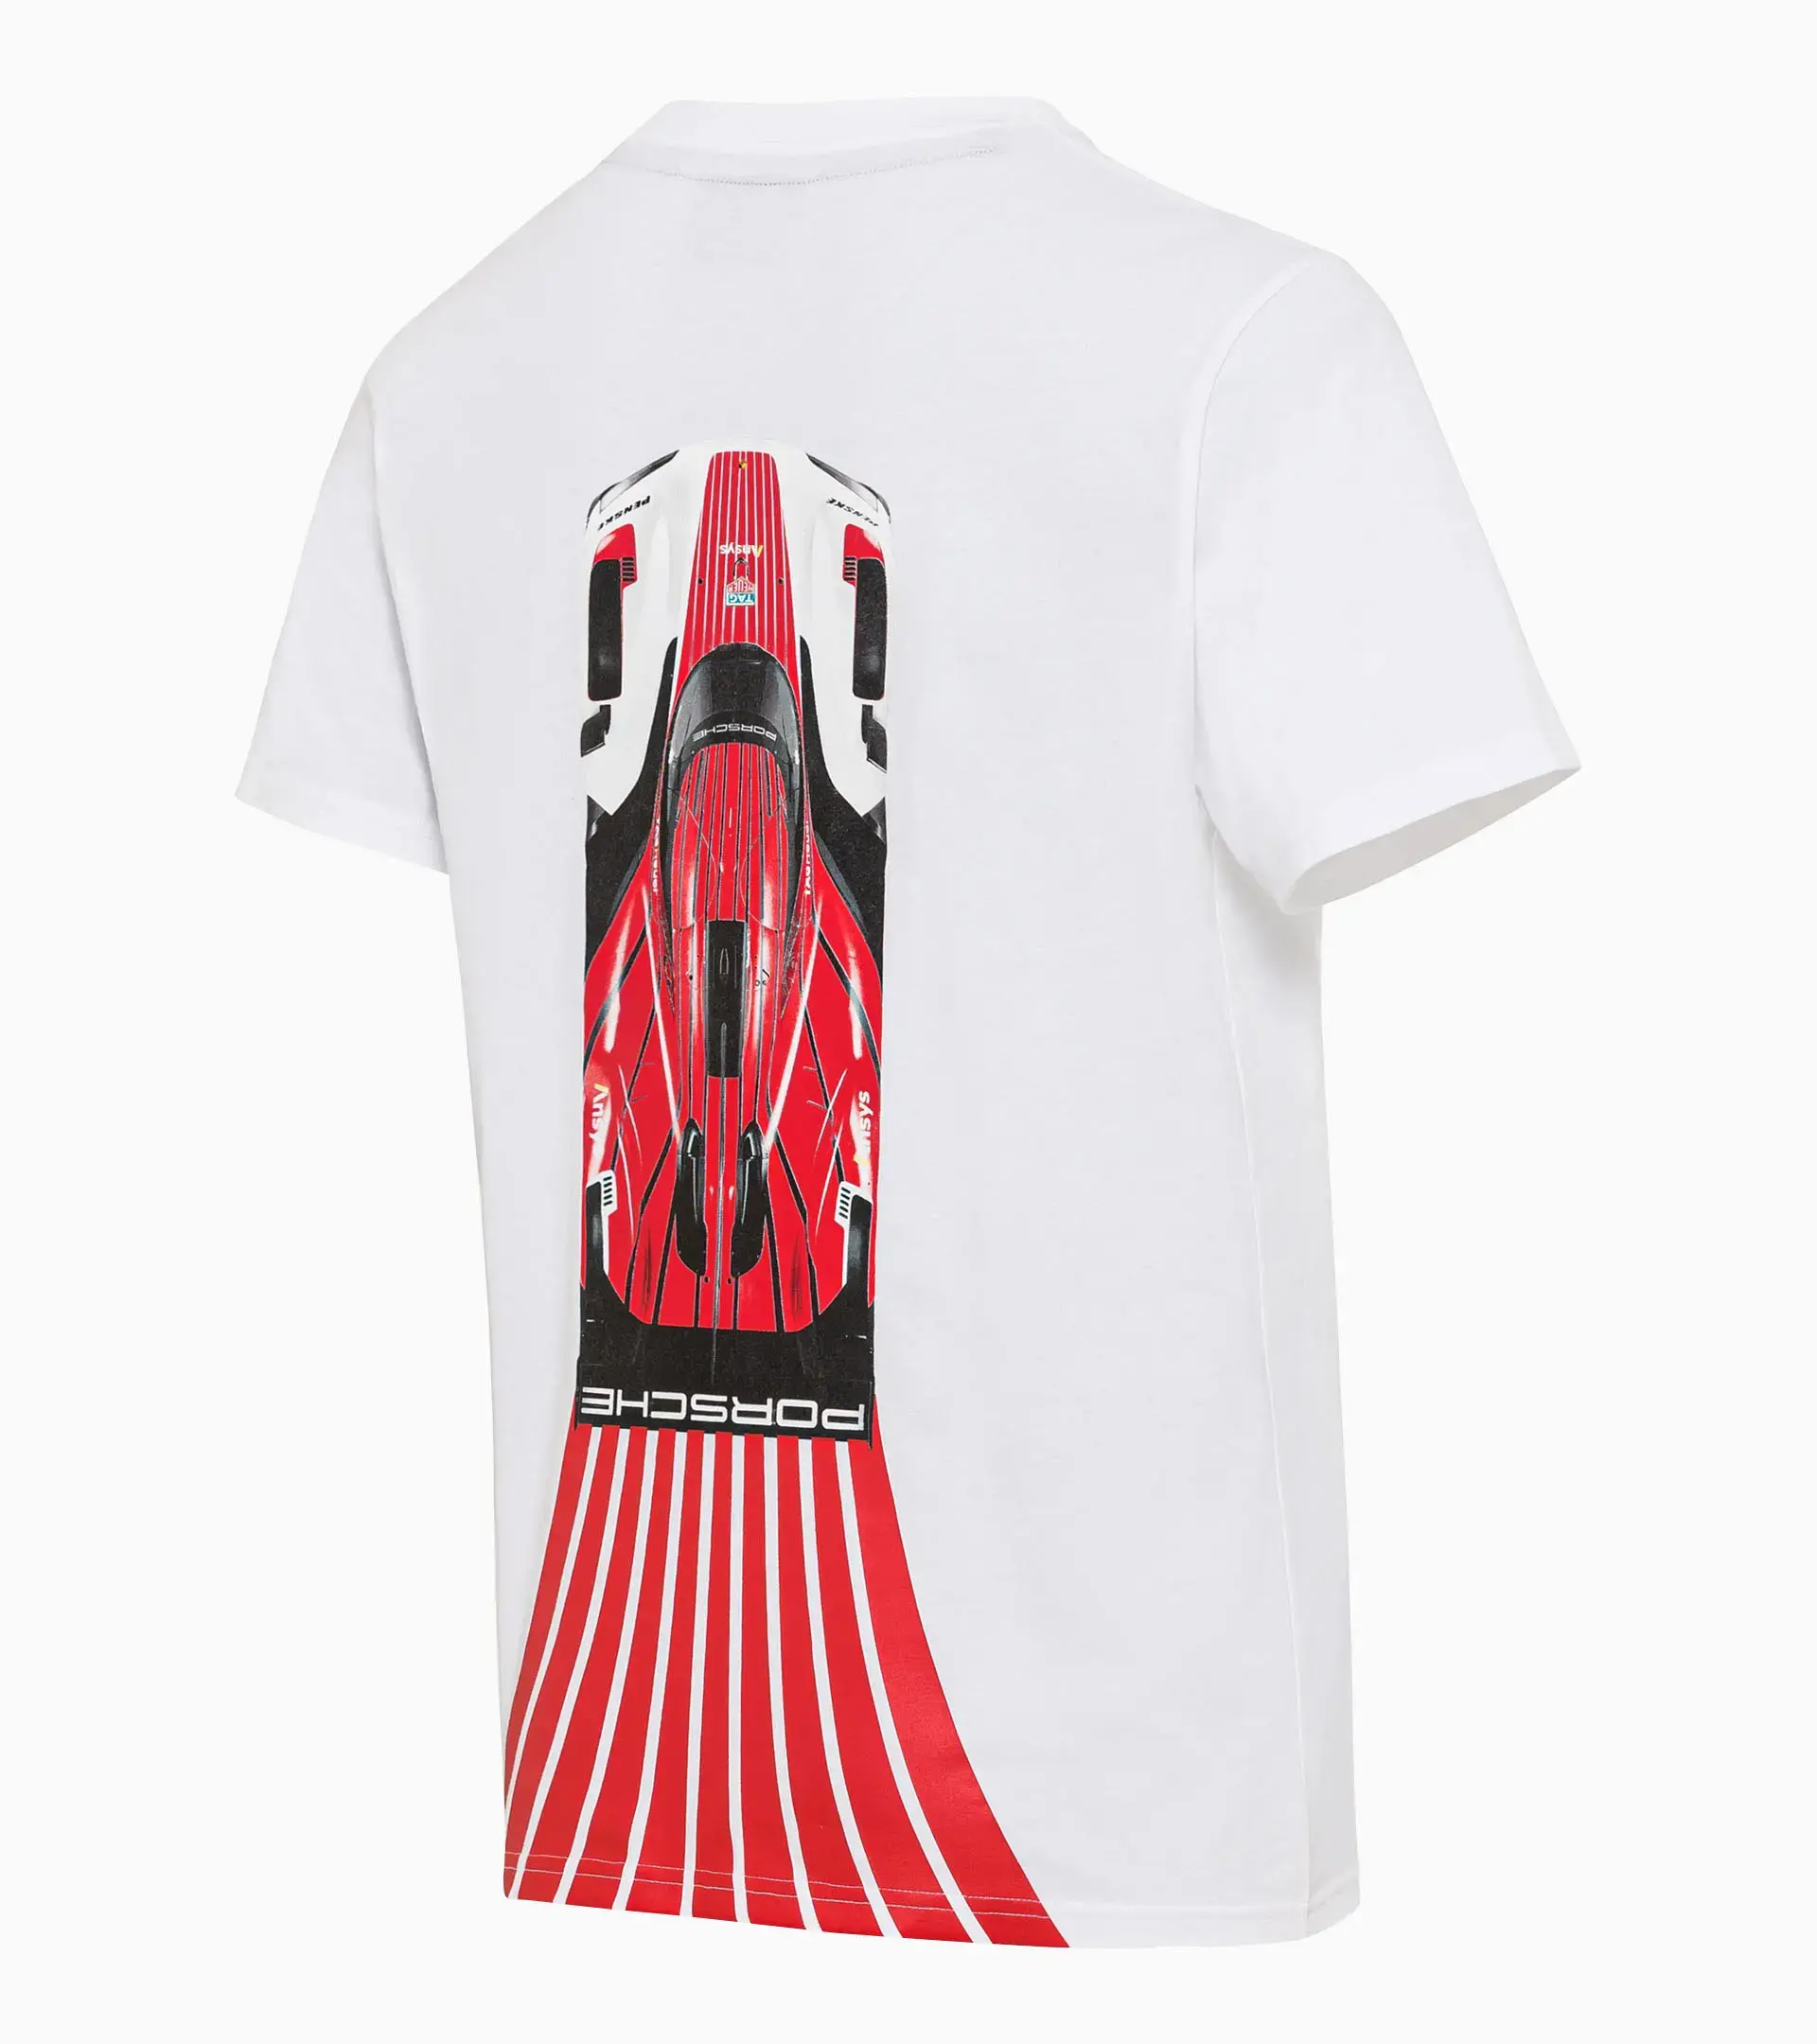 Unisex T-Shirt – Porsche Penske Motorsport | PORSCHE SHOP